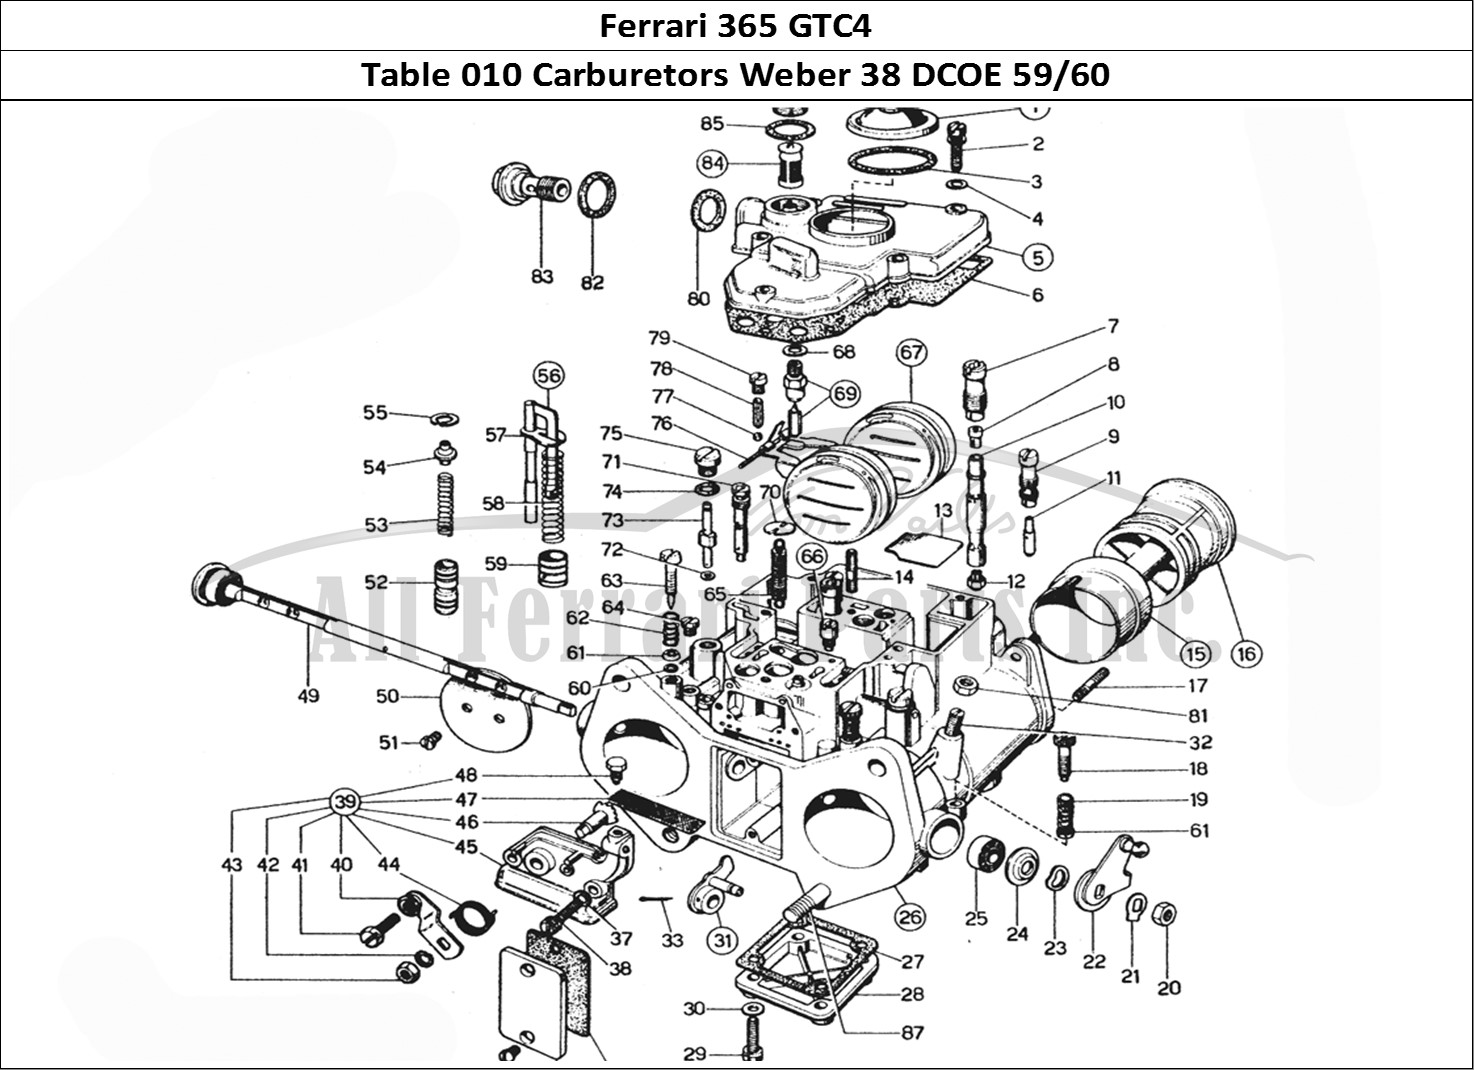 Ferrari Parts Ferrari 365 GTC4 (Mechanical) Page 010 Carburatore Weber 38 DCOE